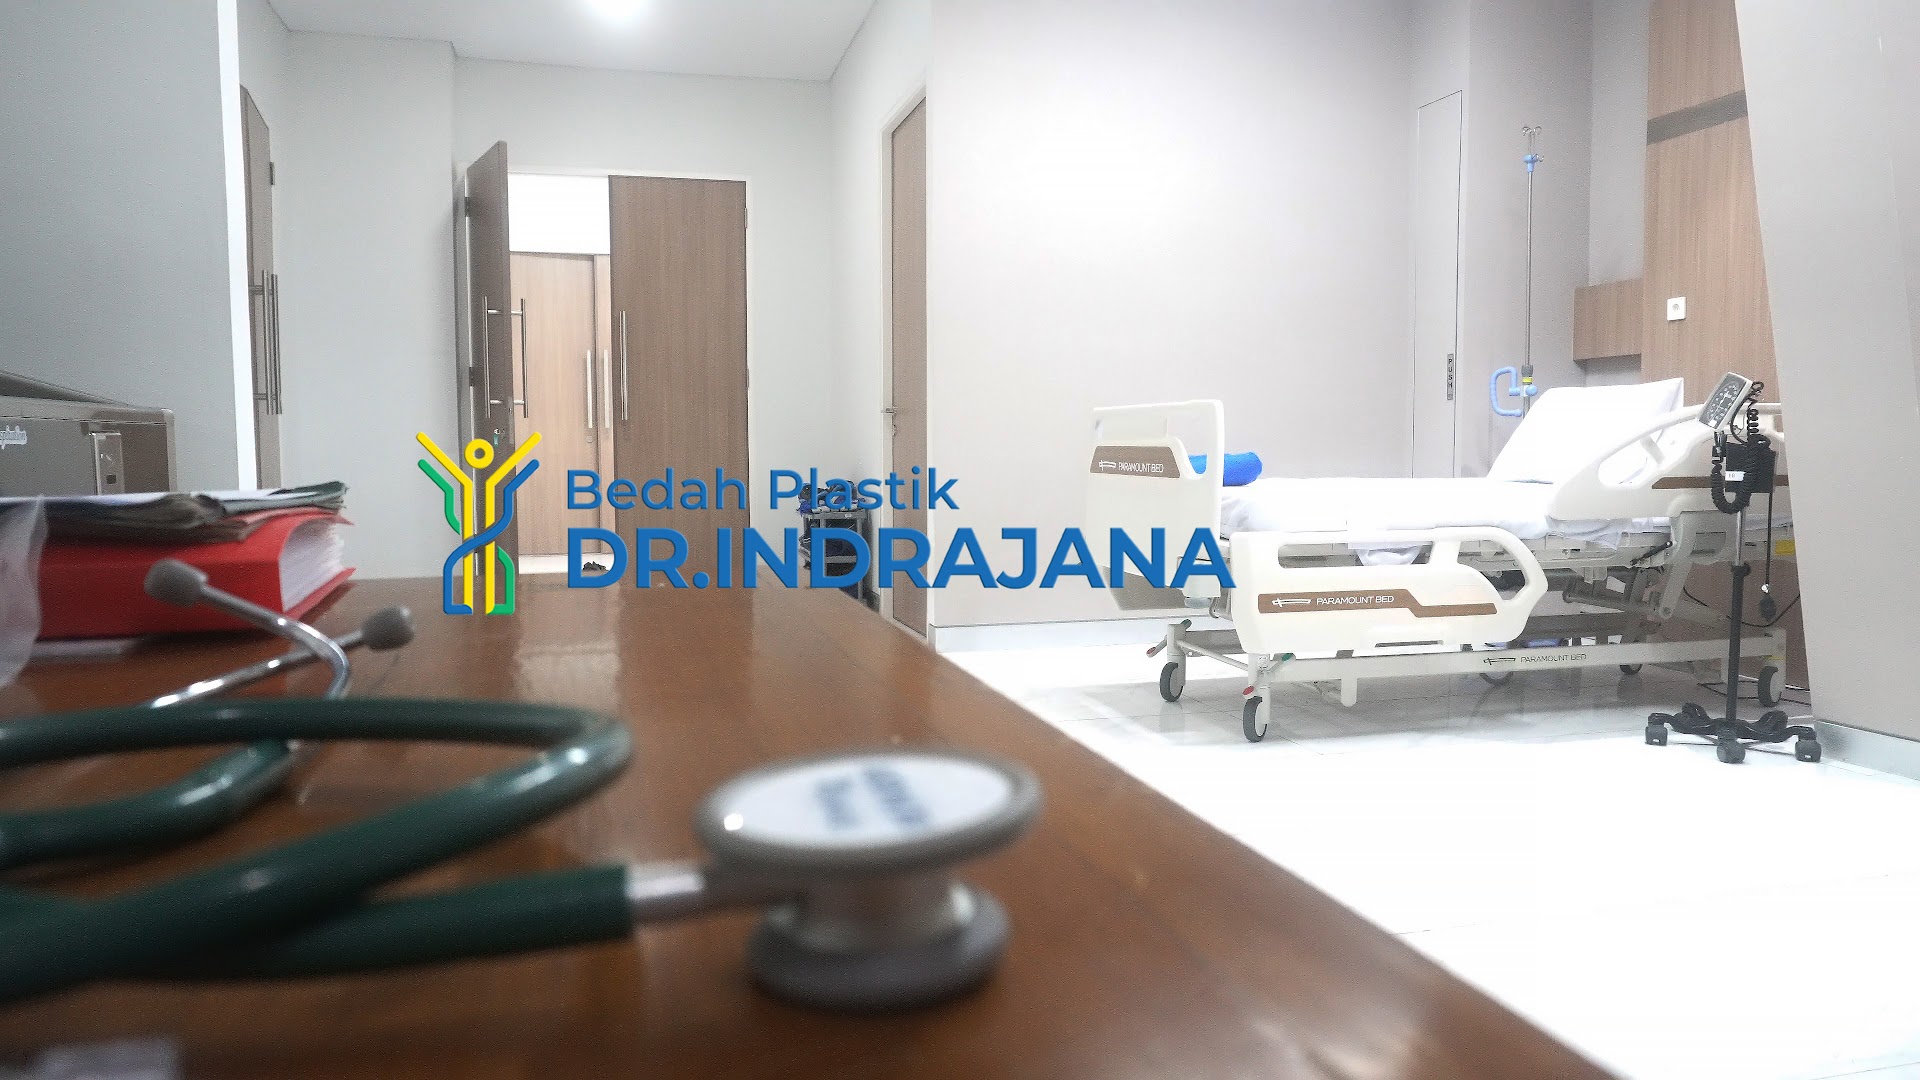 Gambar Klinik Bedah Plastik Dr Indrajana